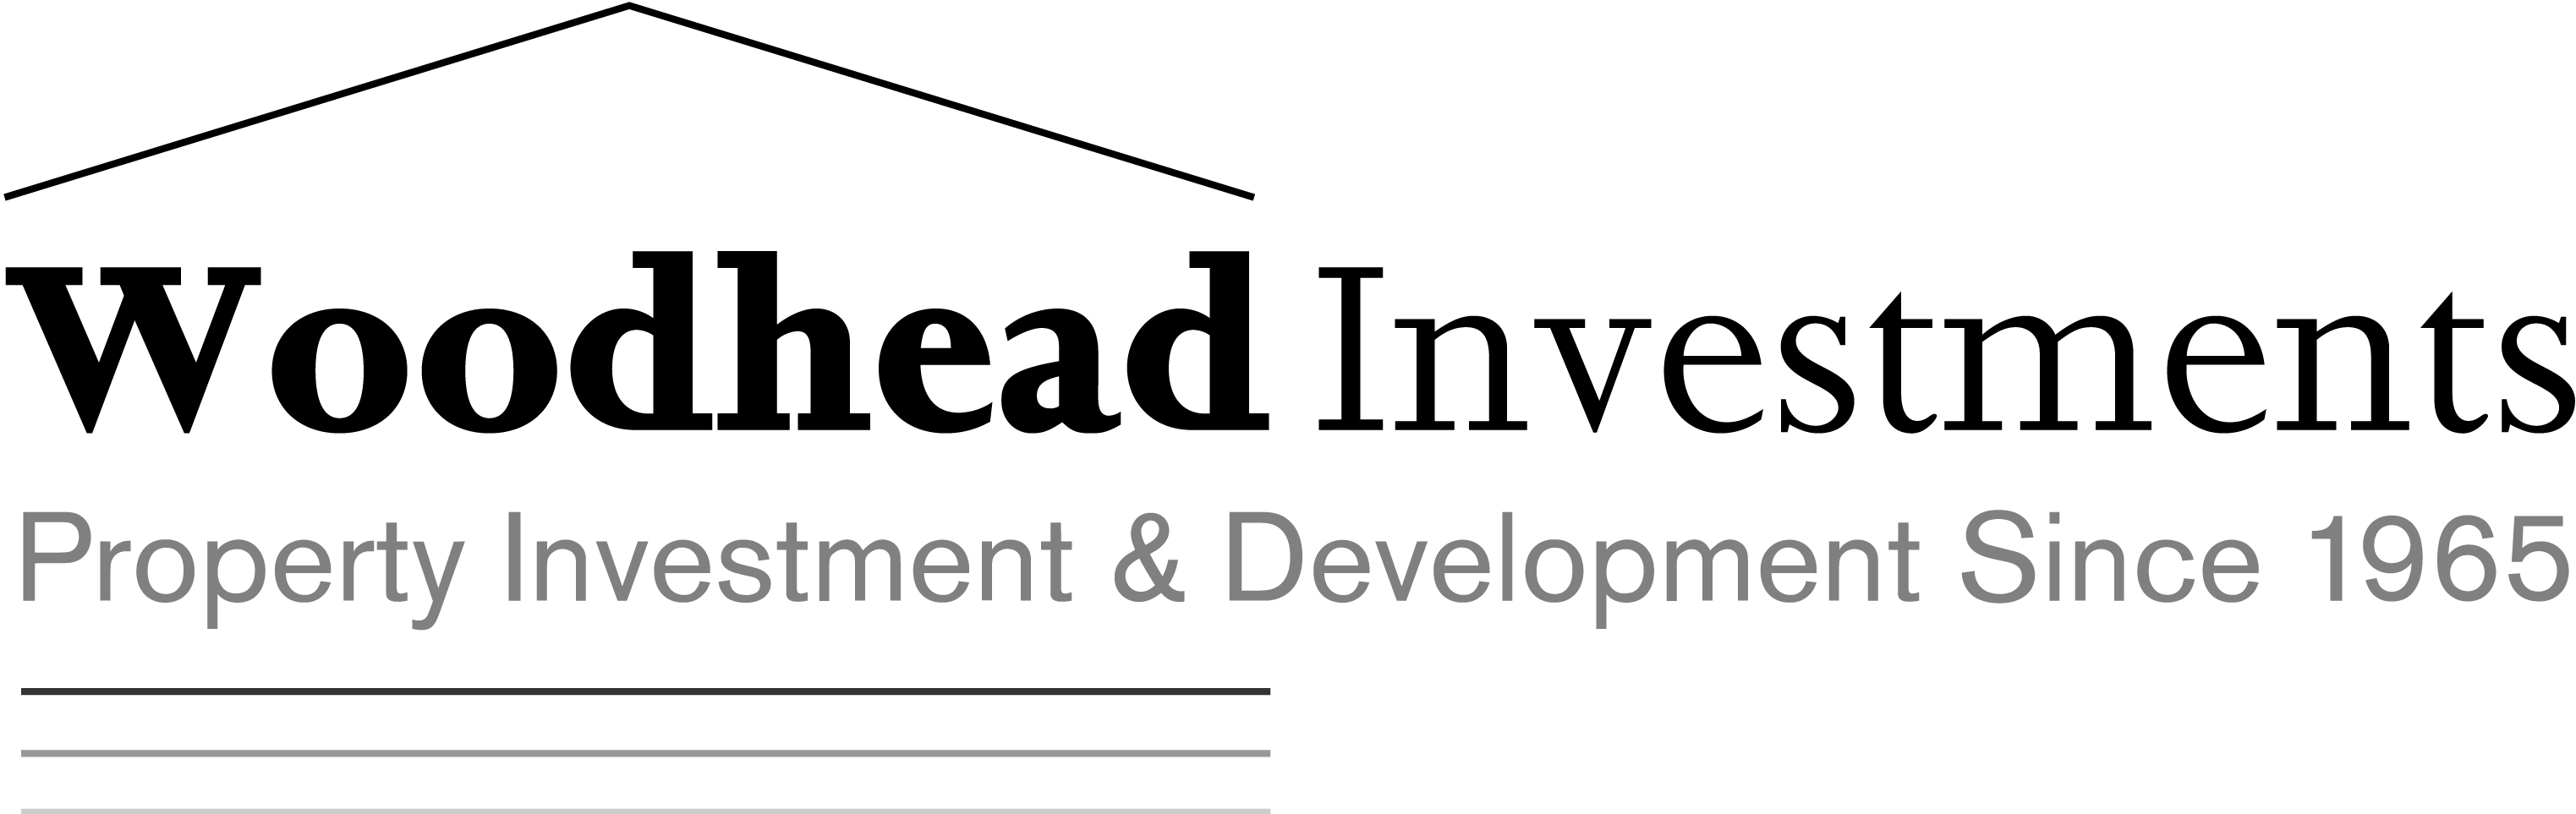 Woodhead Logo - Woodhead Investments